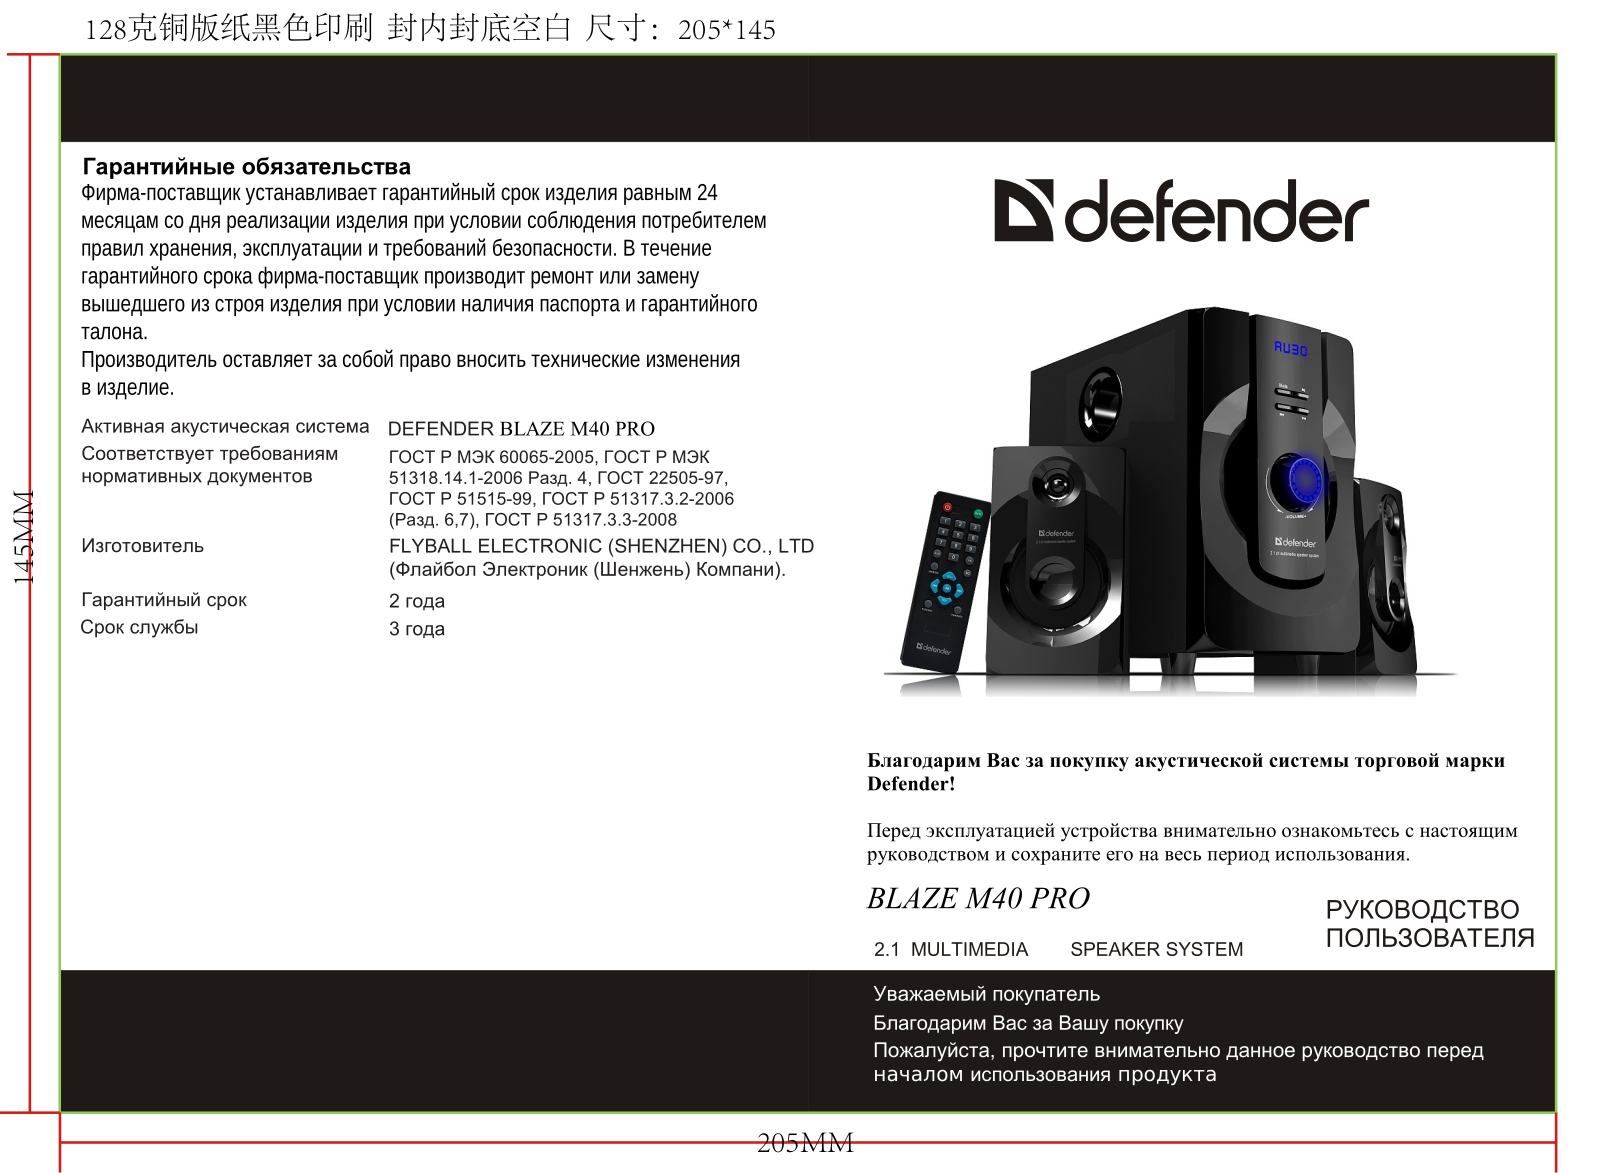 Defender Blaze M40 PRO User Manual